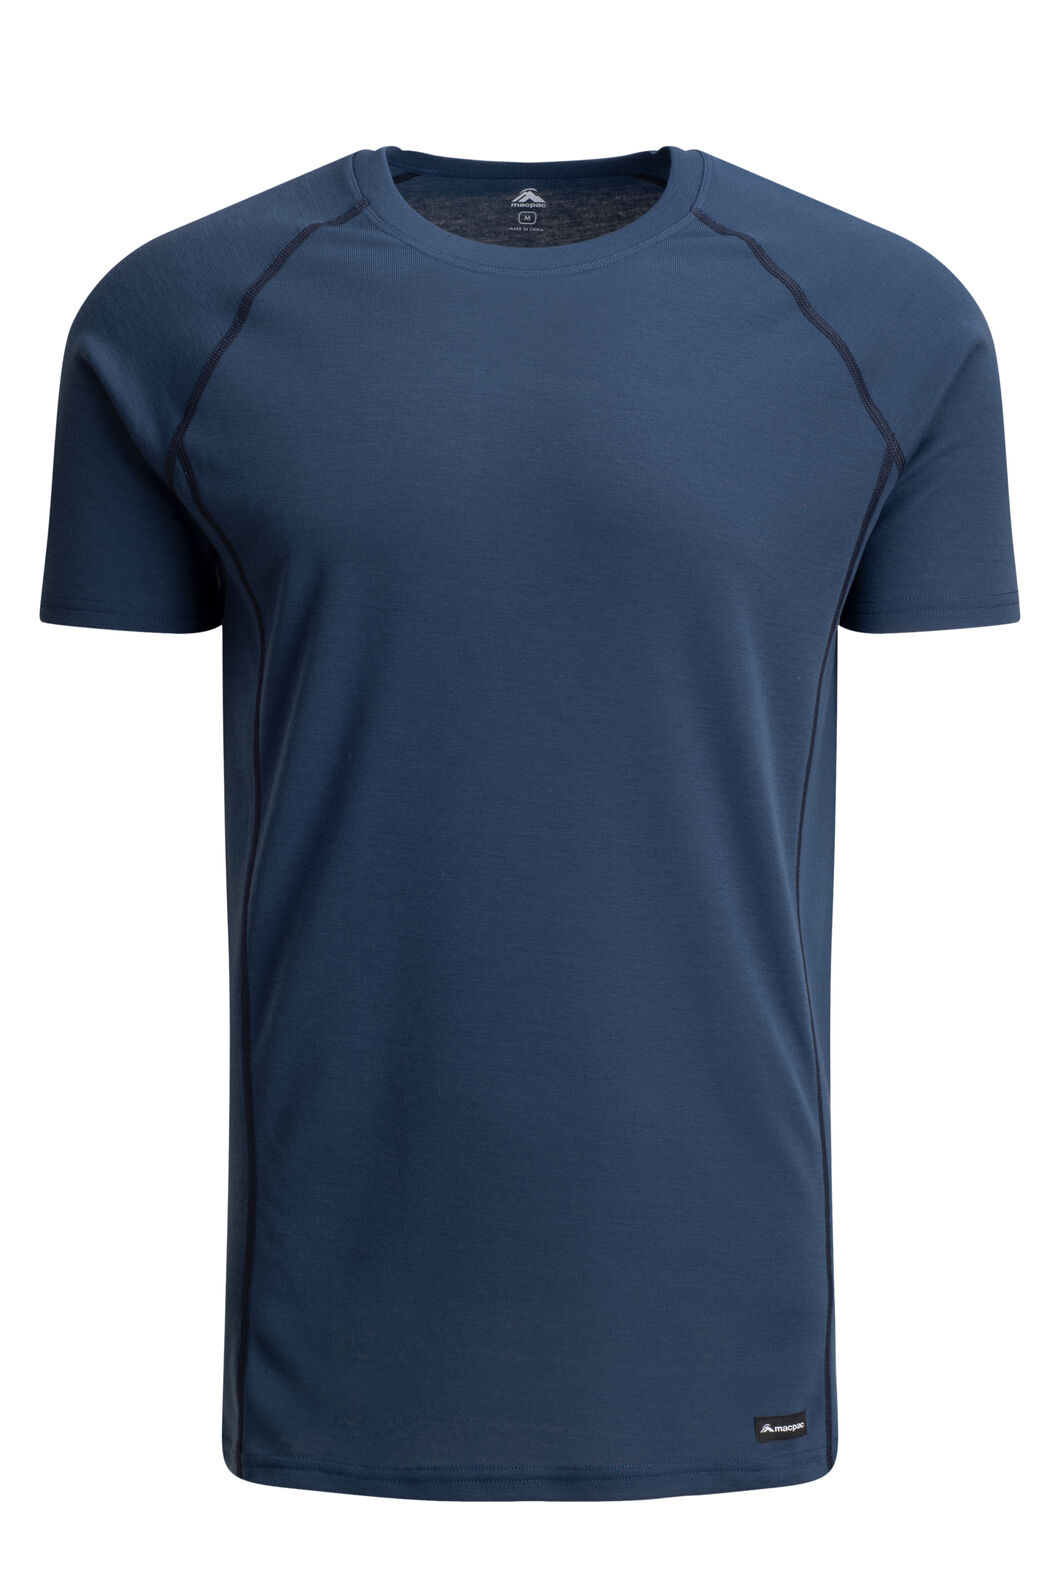 Macpac Men's Geothermal Short Sleeve Top, Insignia Blue, hi-res